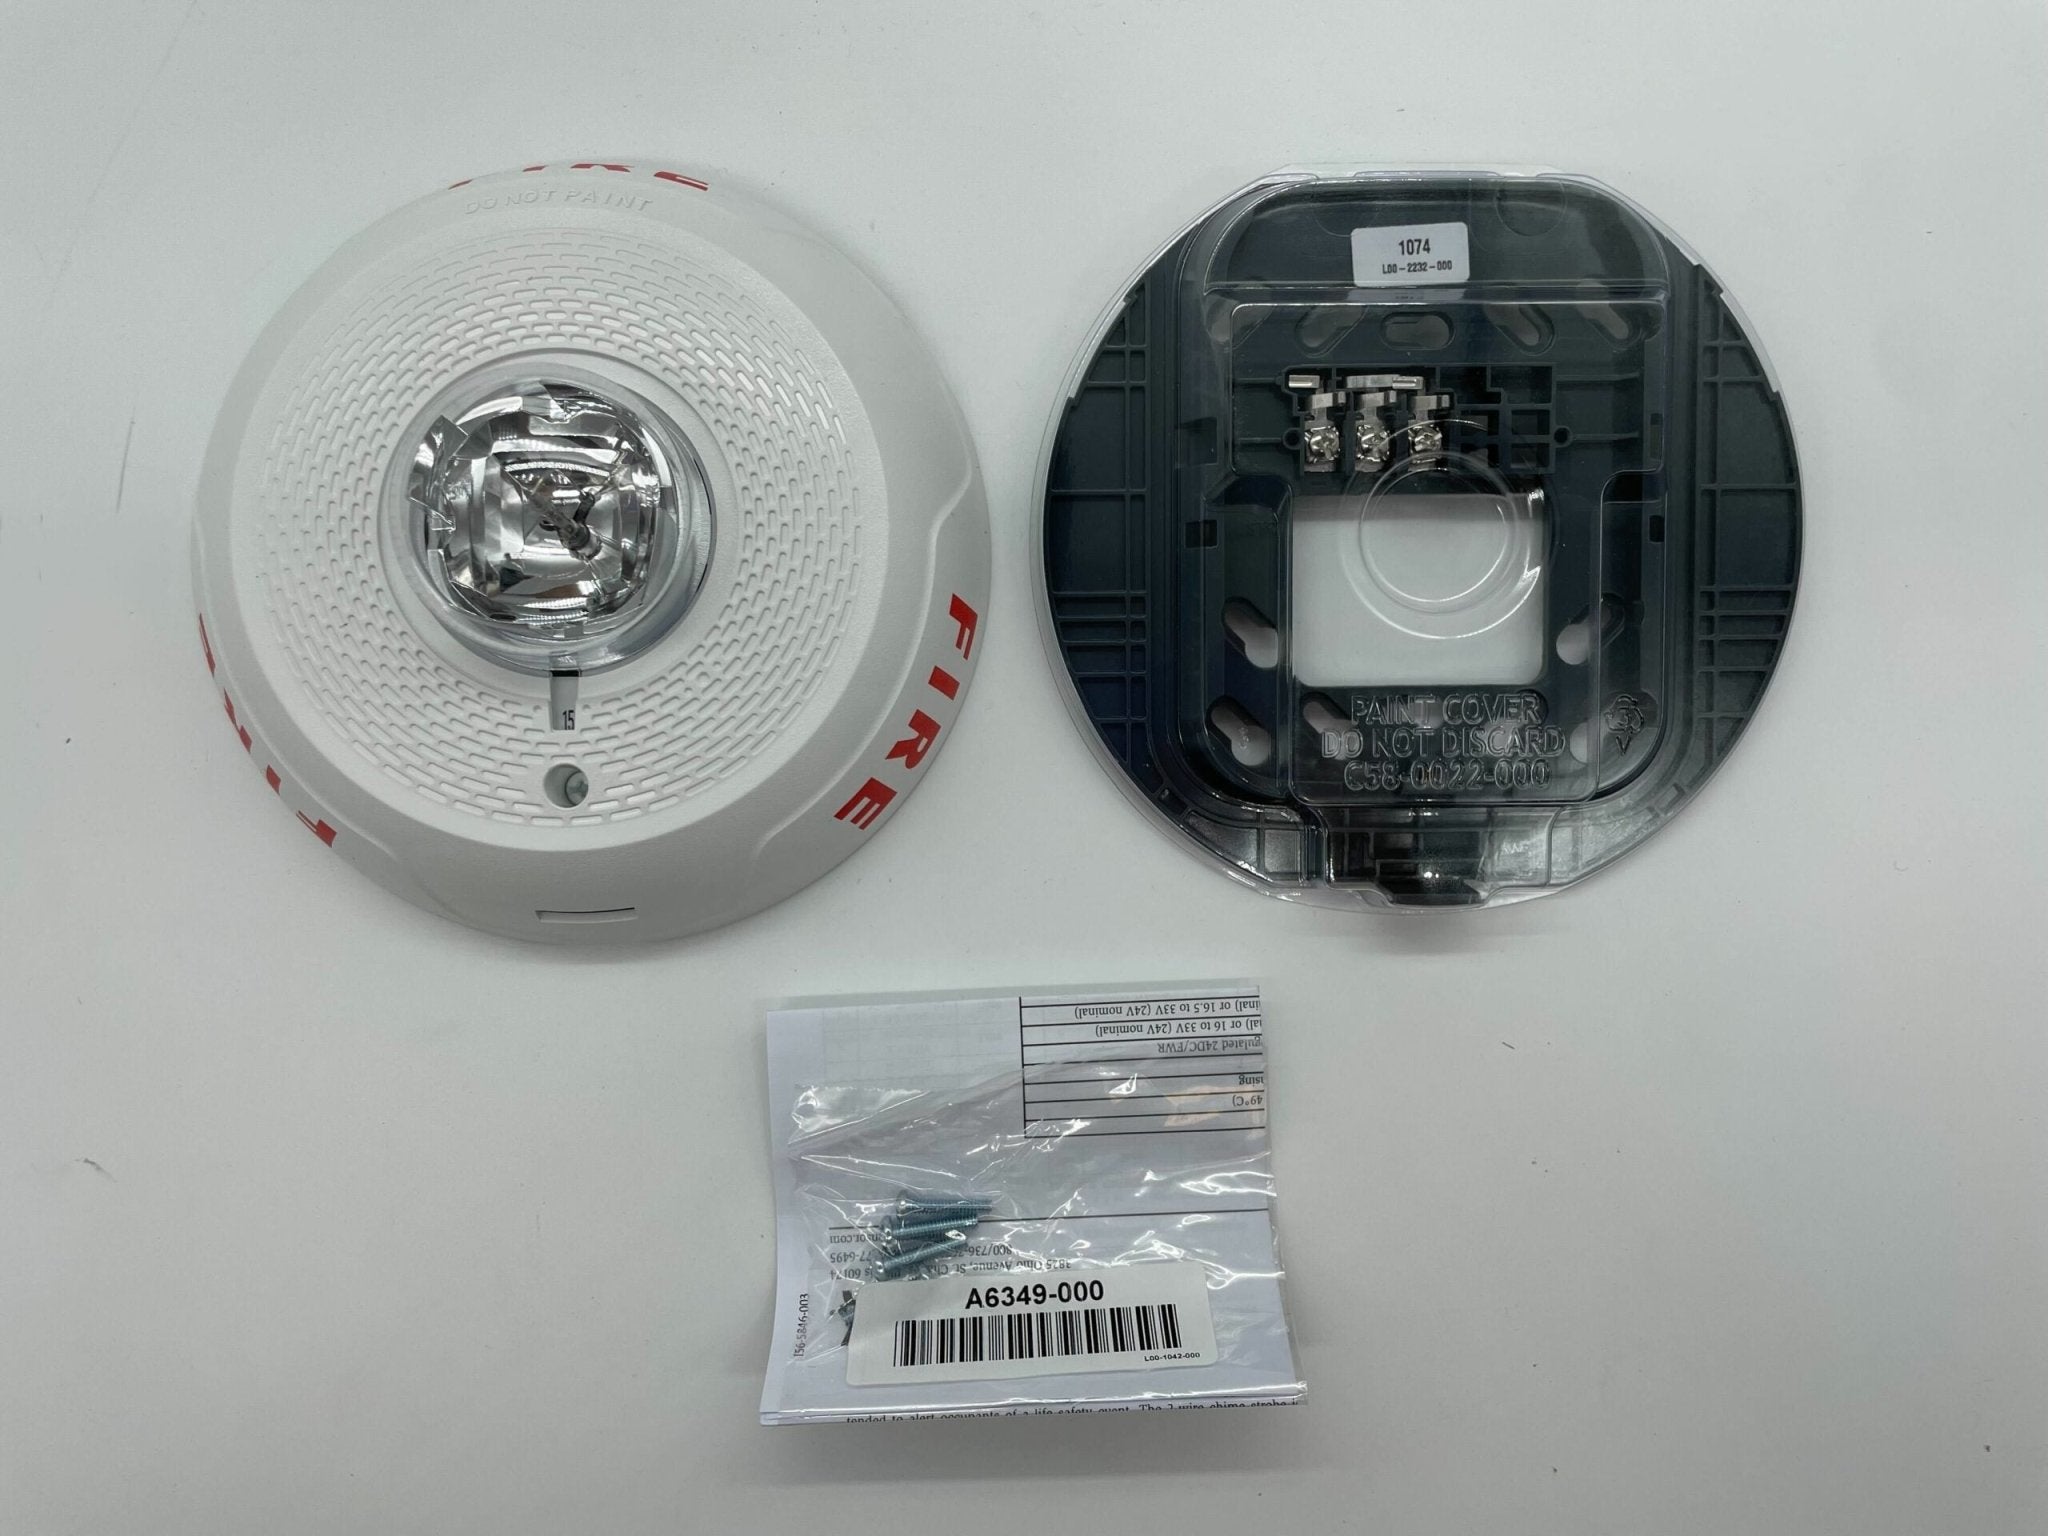 System Sensor SCWL - The Fire Alarm Supplier